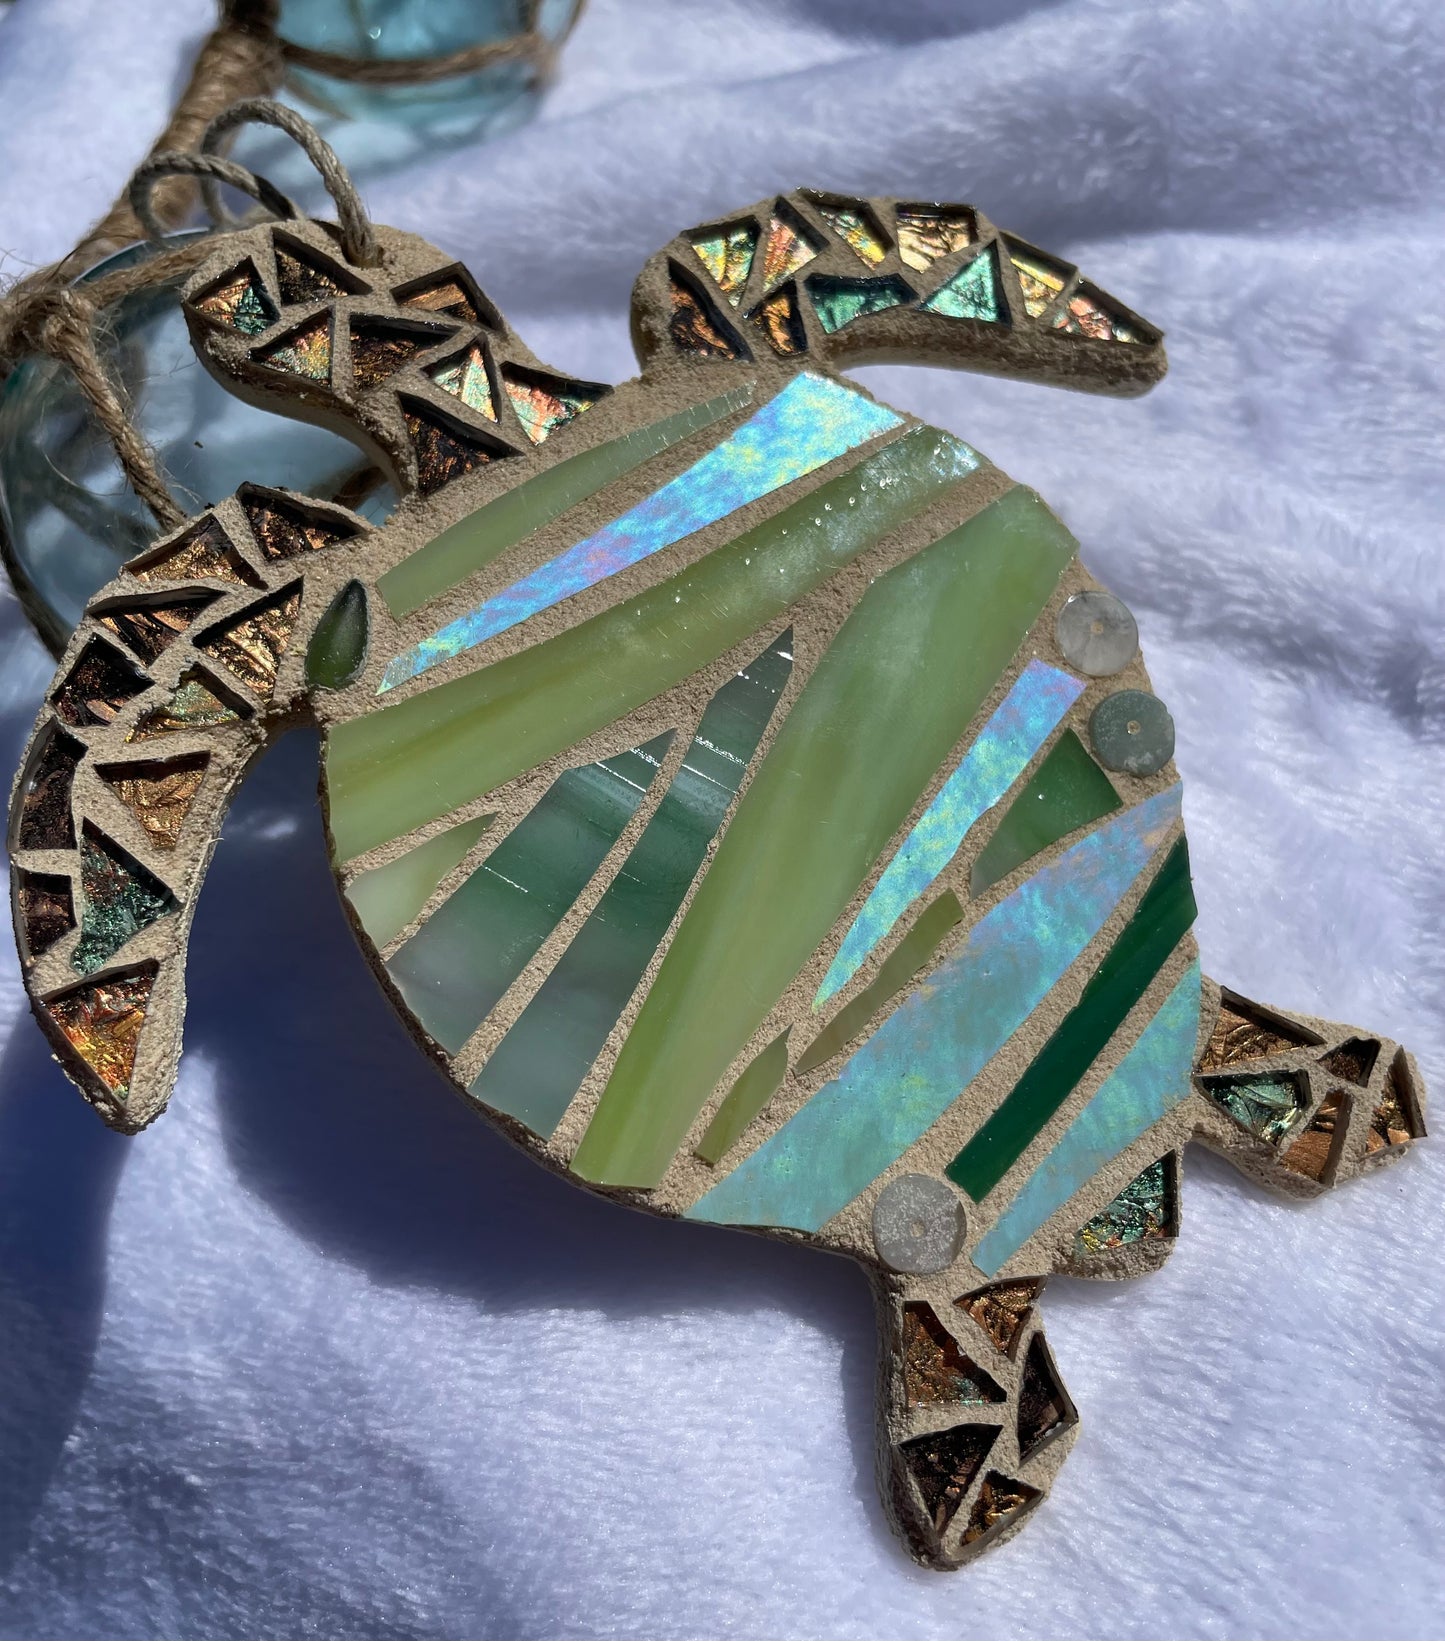 Green sea turtle glass/bead mosaic ornaments